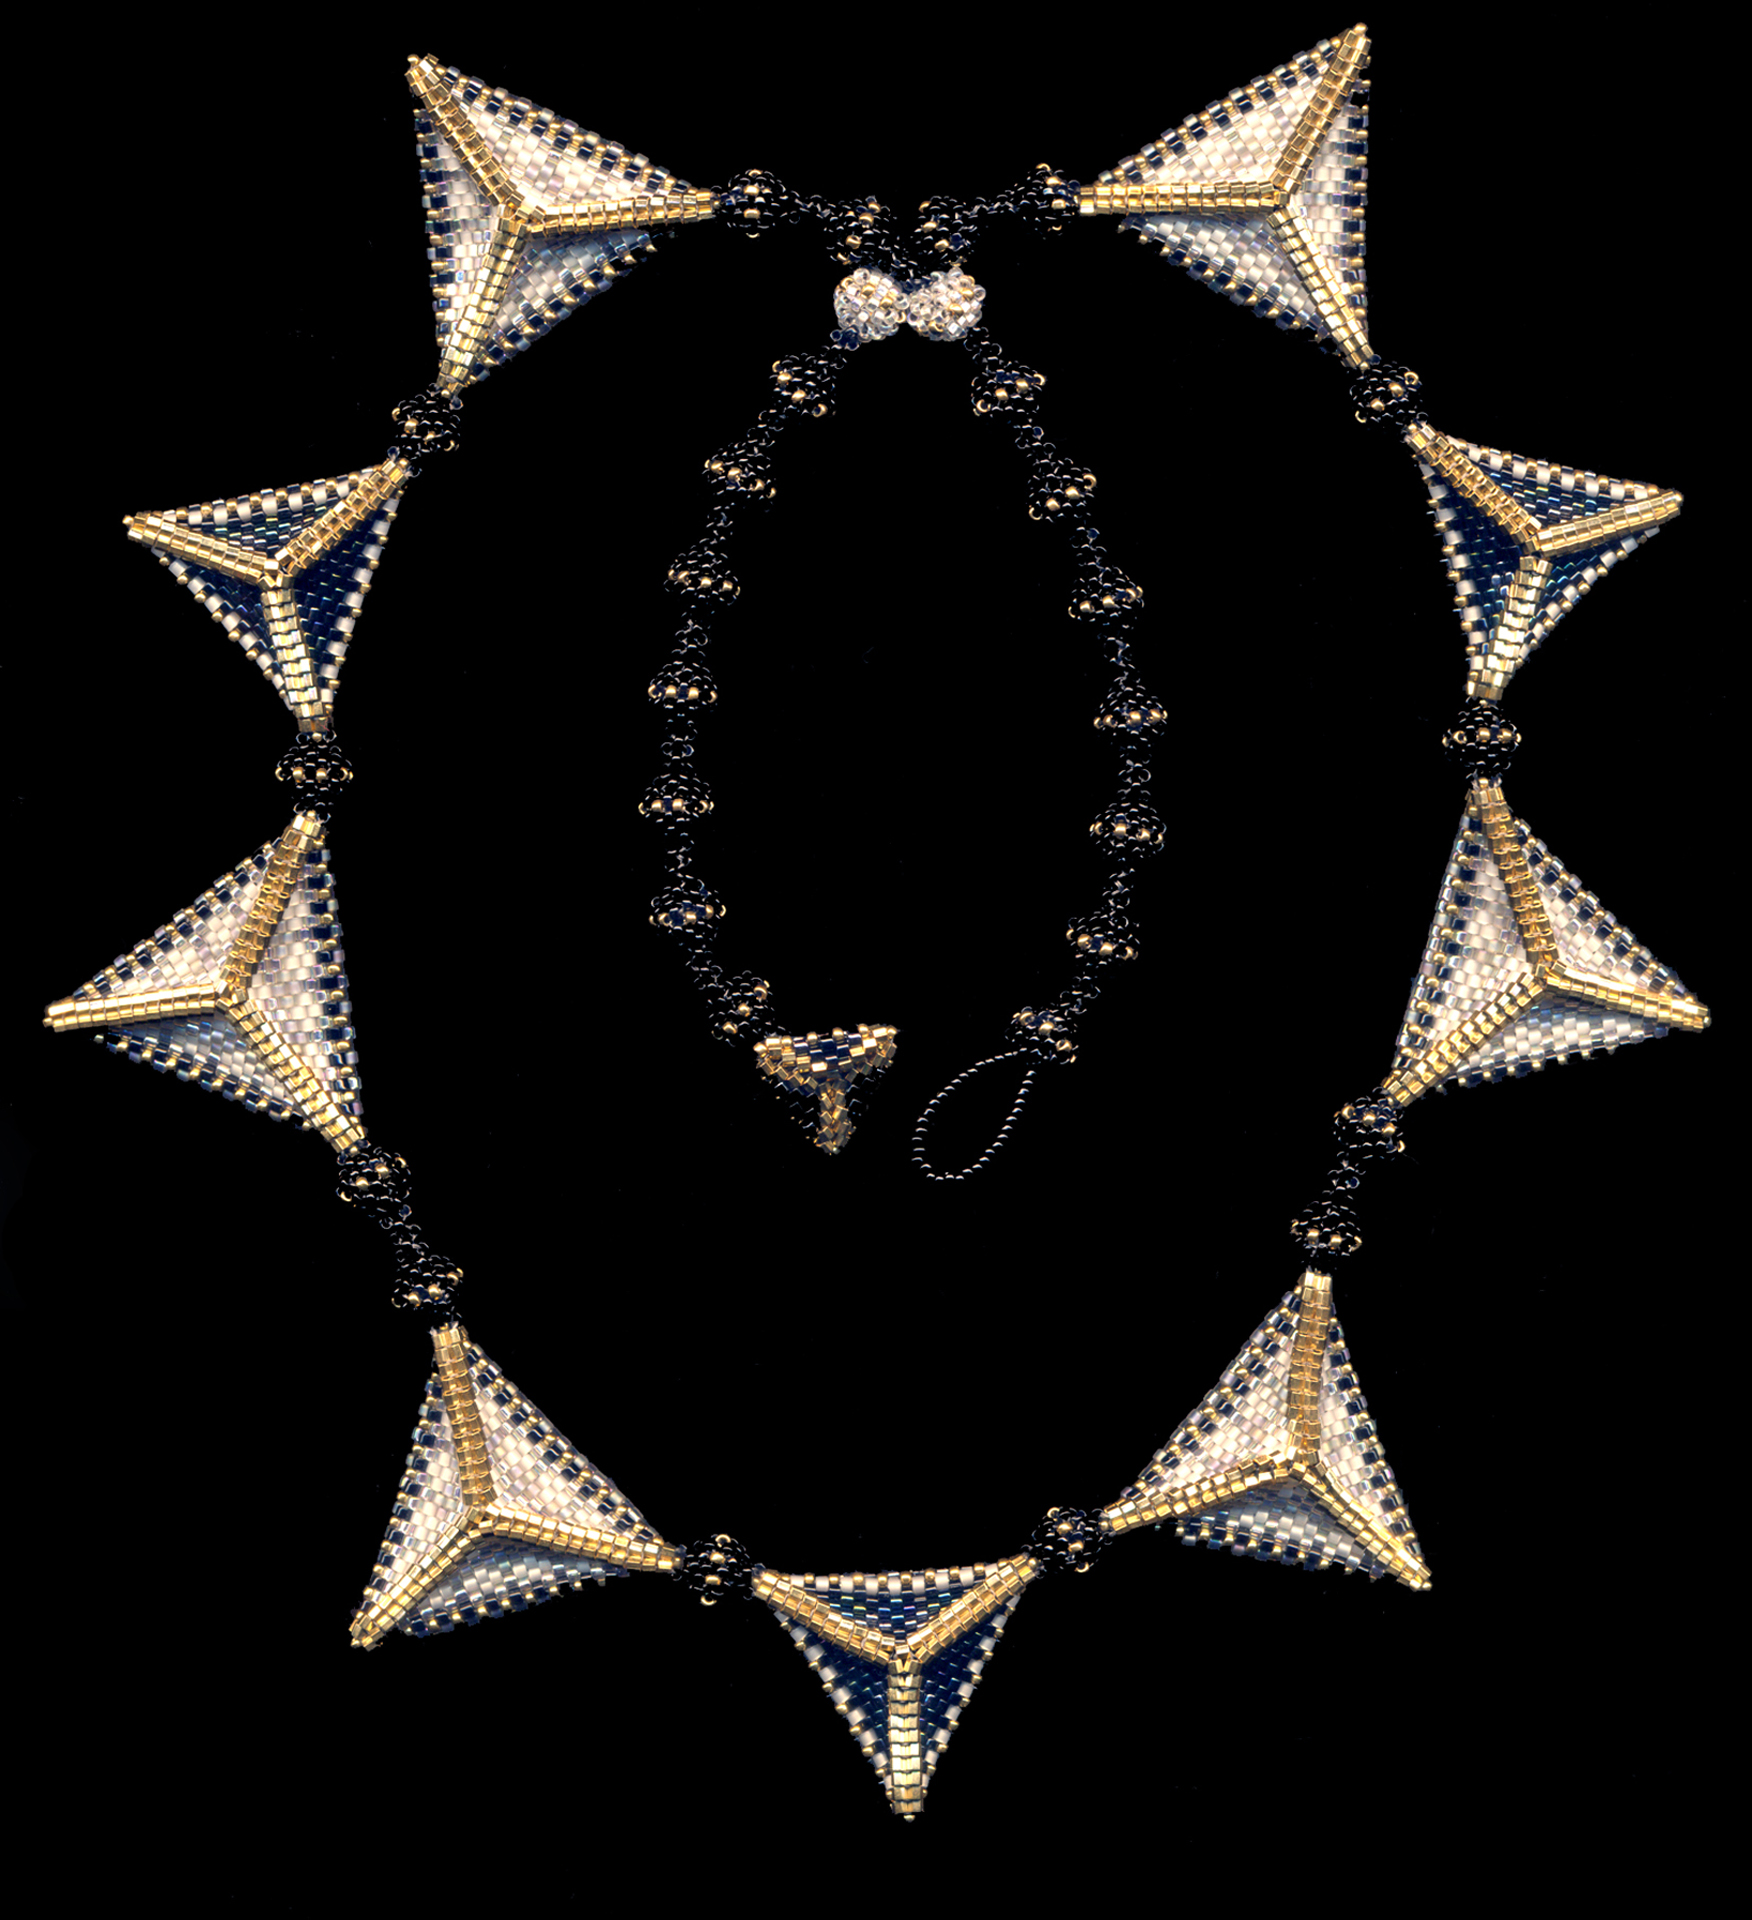 Tri-ridge necklace